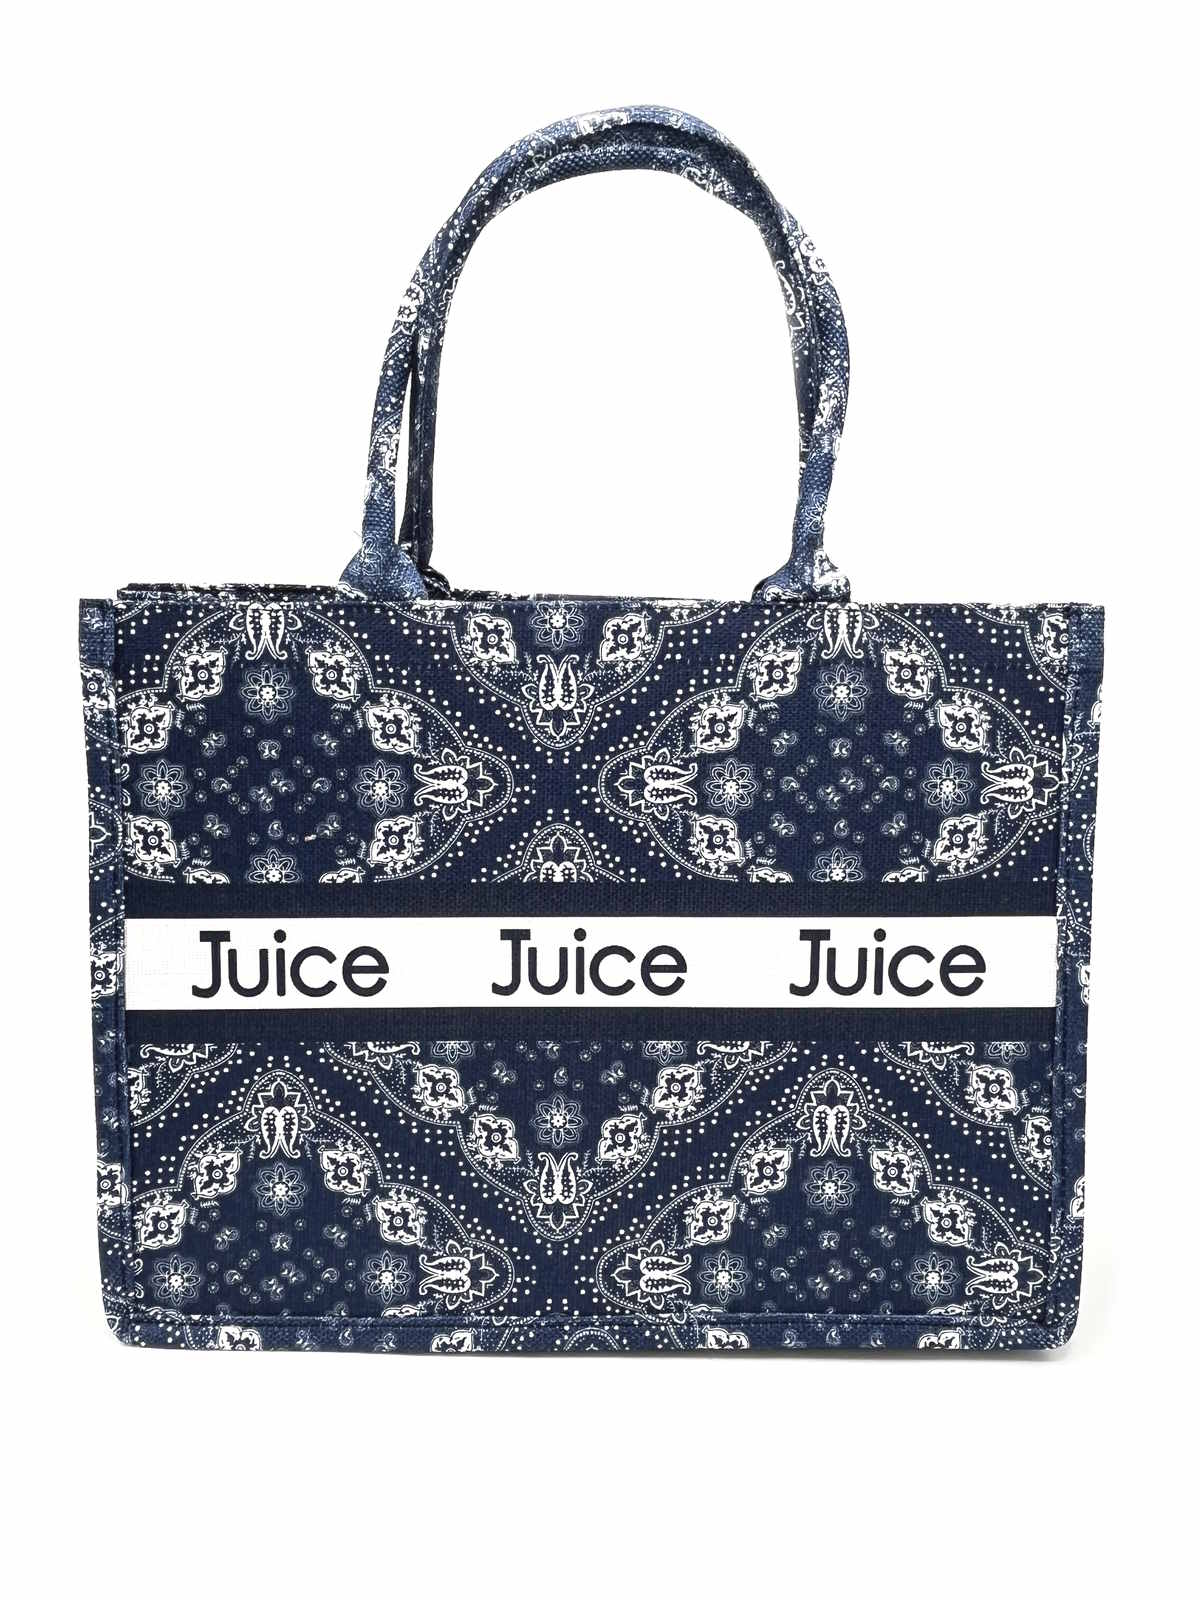 Brand Juice, Shopping bag, art. 231058.155